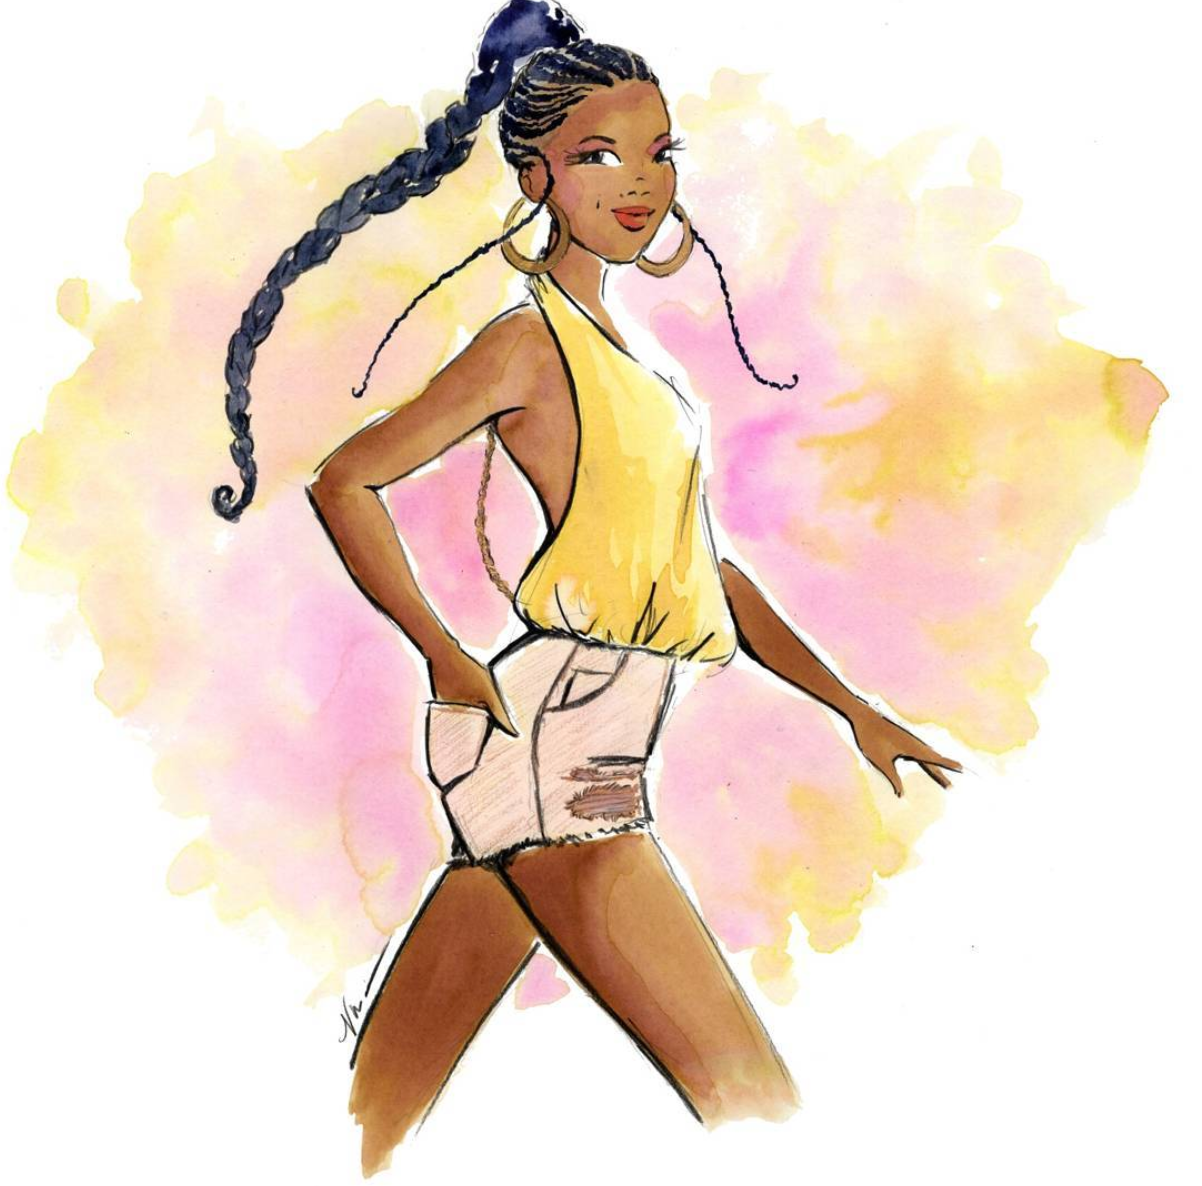 Black Girls Draw: Veronica Marché Is Illustrating Black Joy Like You've Never Seen